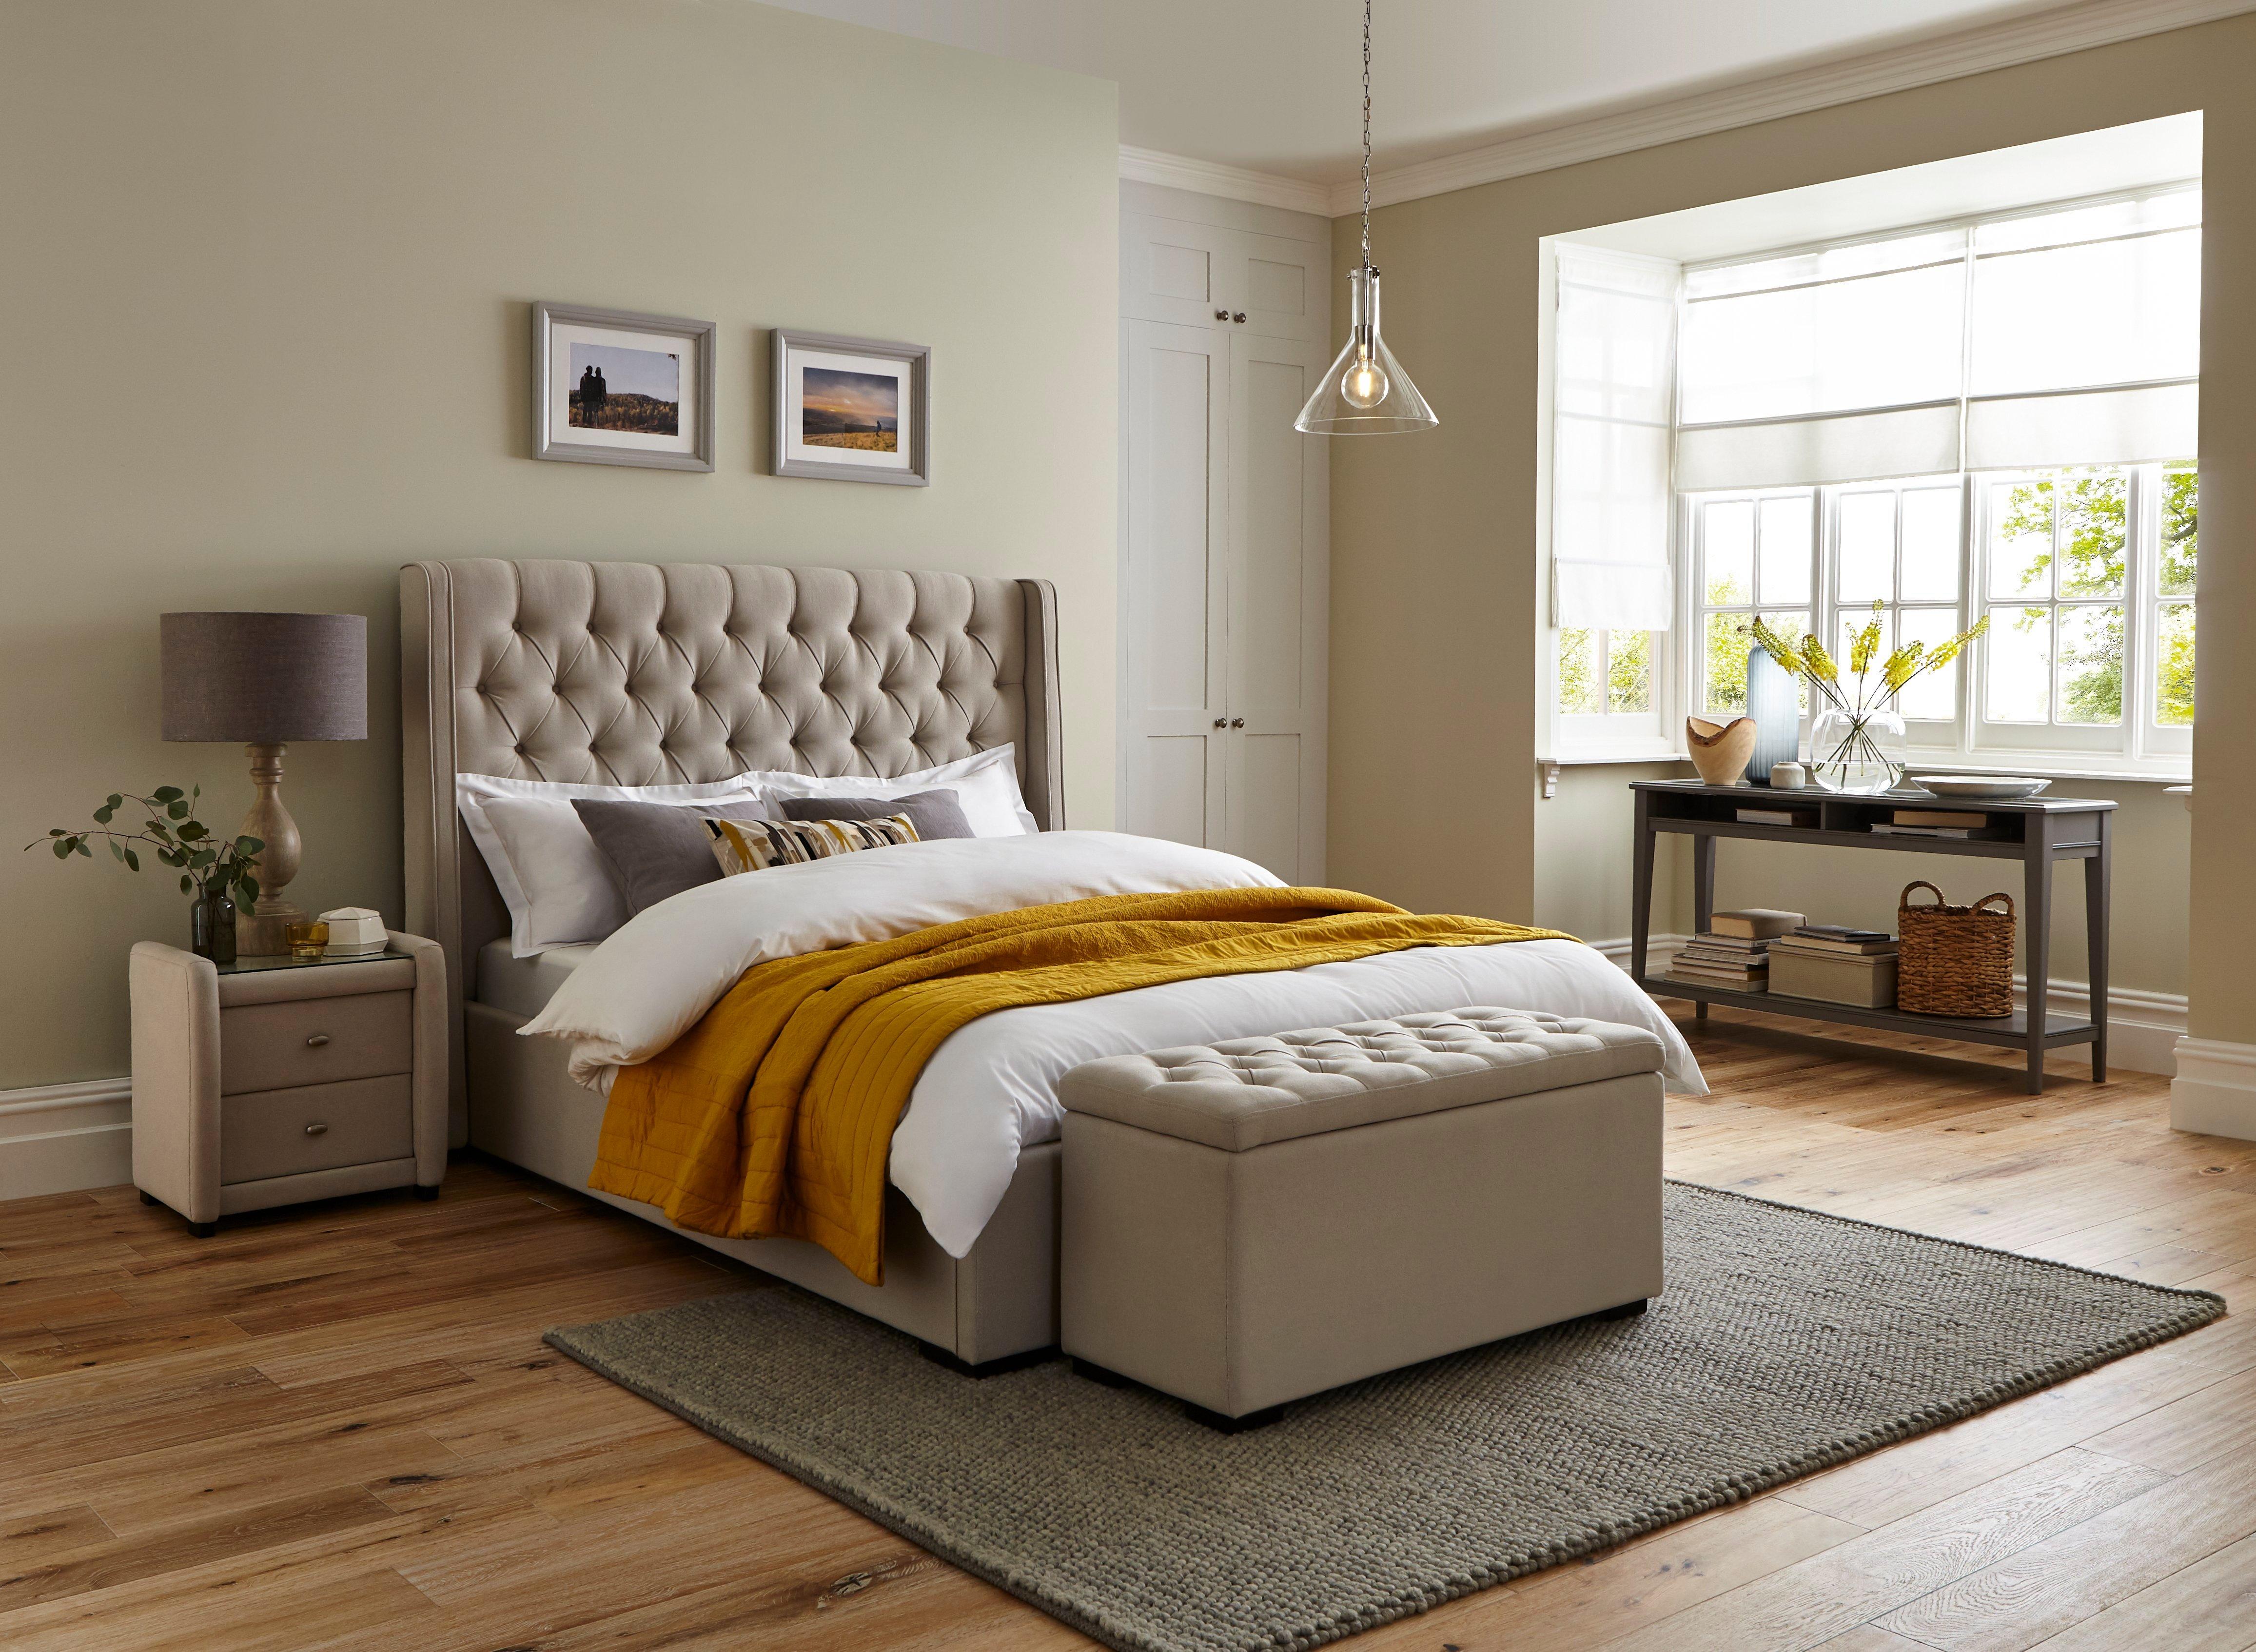 haag vlotter Iedereen Bed Size Guide - UK & European | Dreams